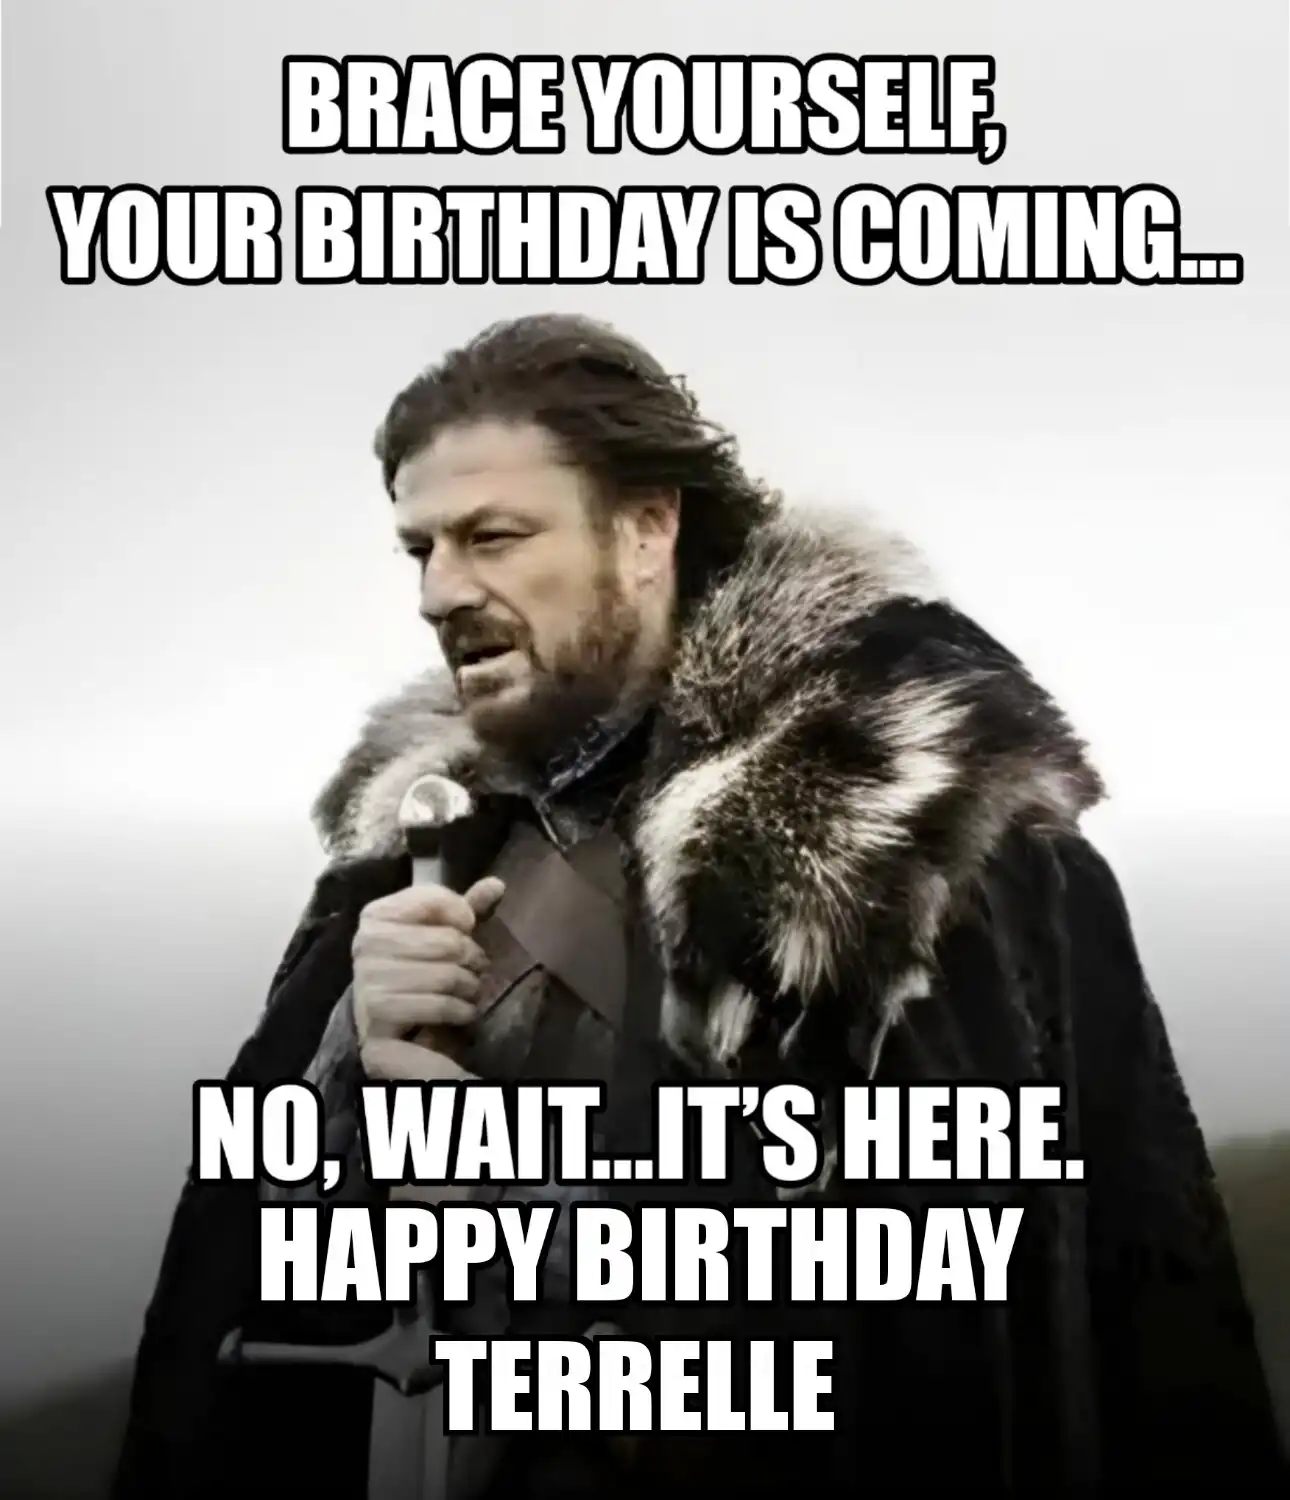 Happy Birthday Terrelle Brace Yourself Your Birthday Is Coming Meme